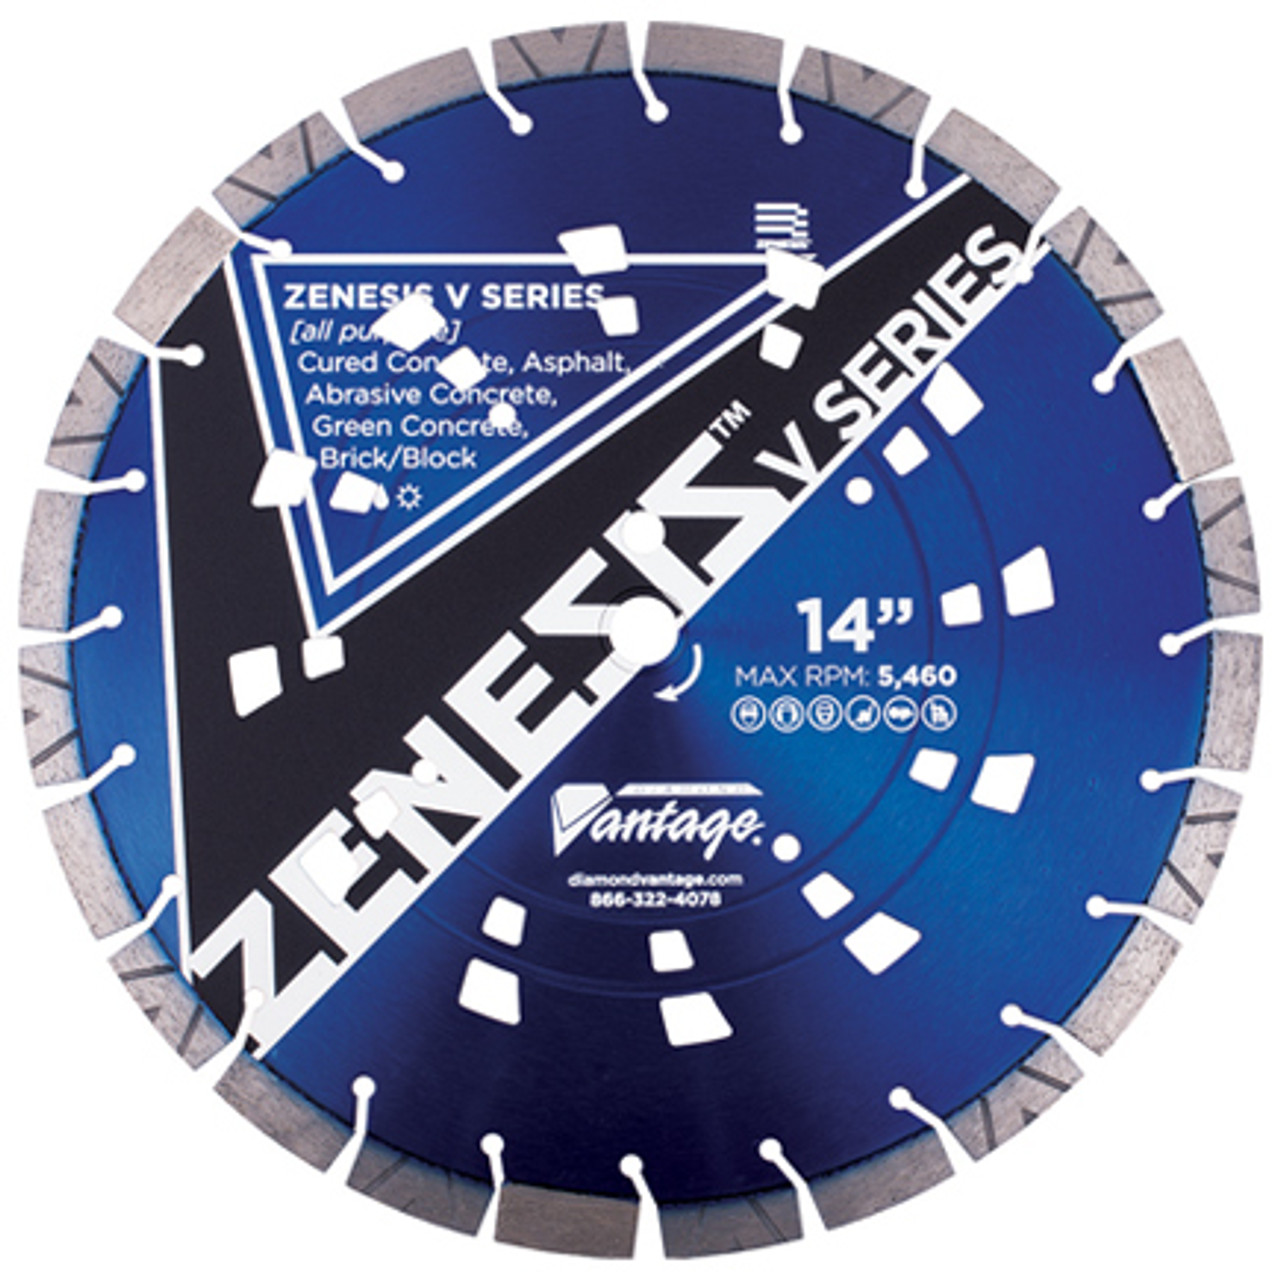 Diamond Vantage ZENESIS V SERIES 12 x .125 x 20mm All-Purpose, ZENESIS V